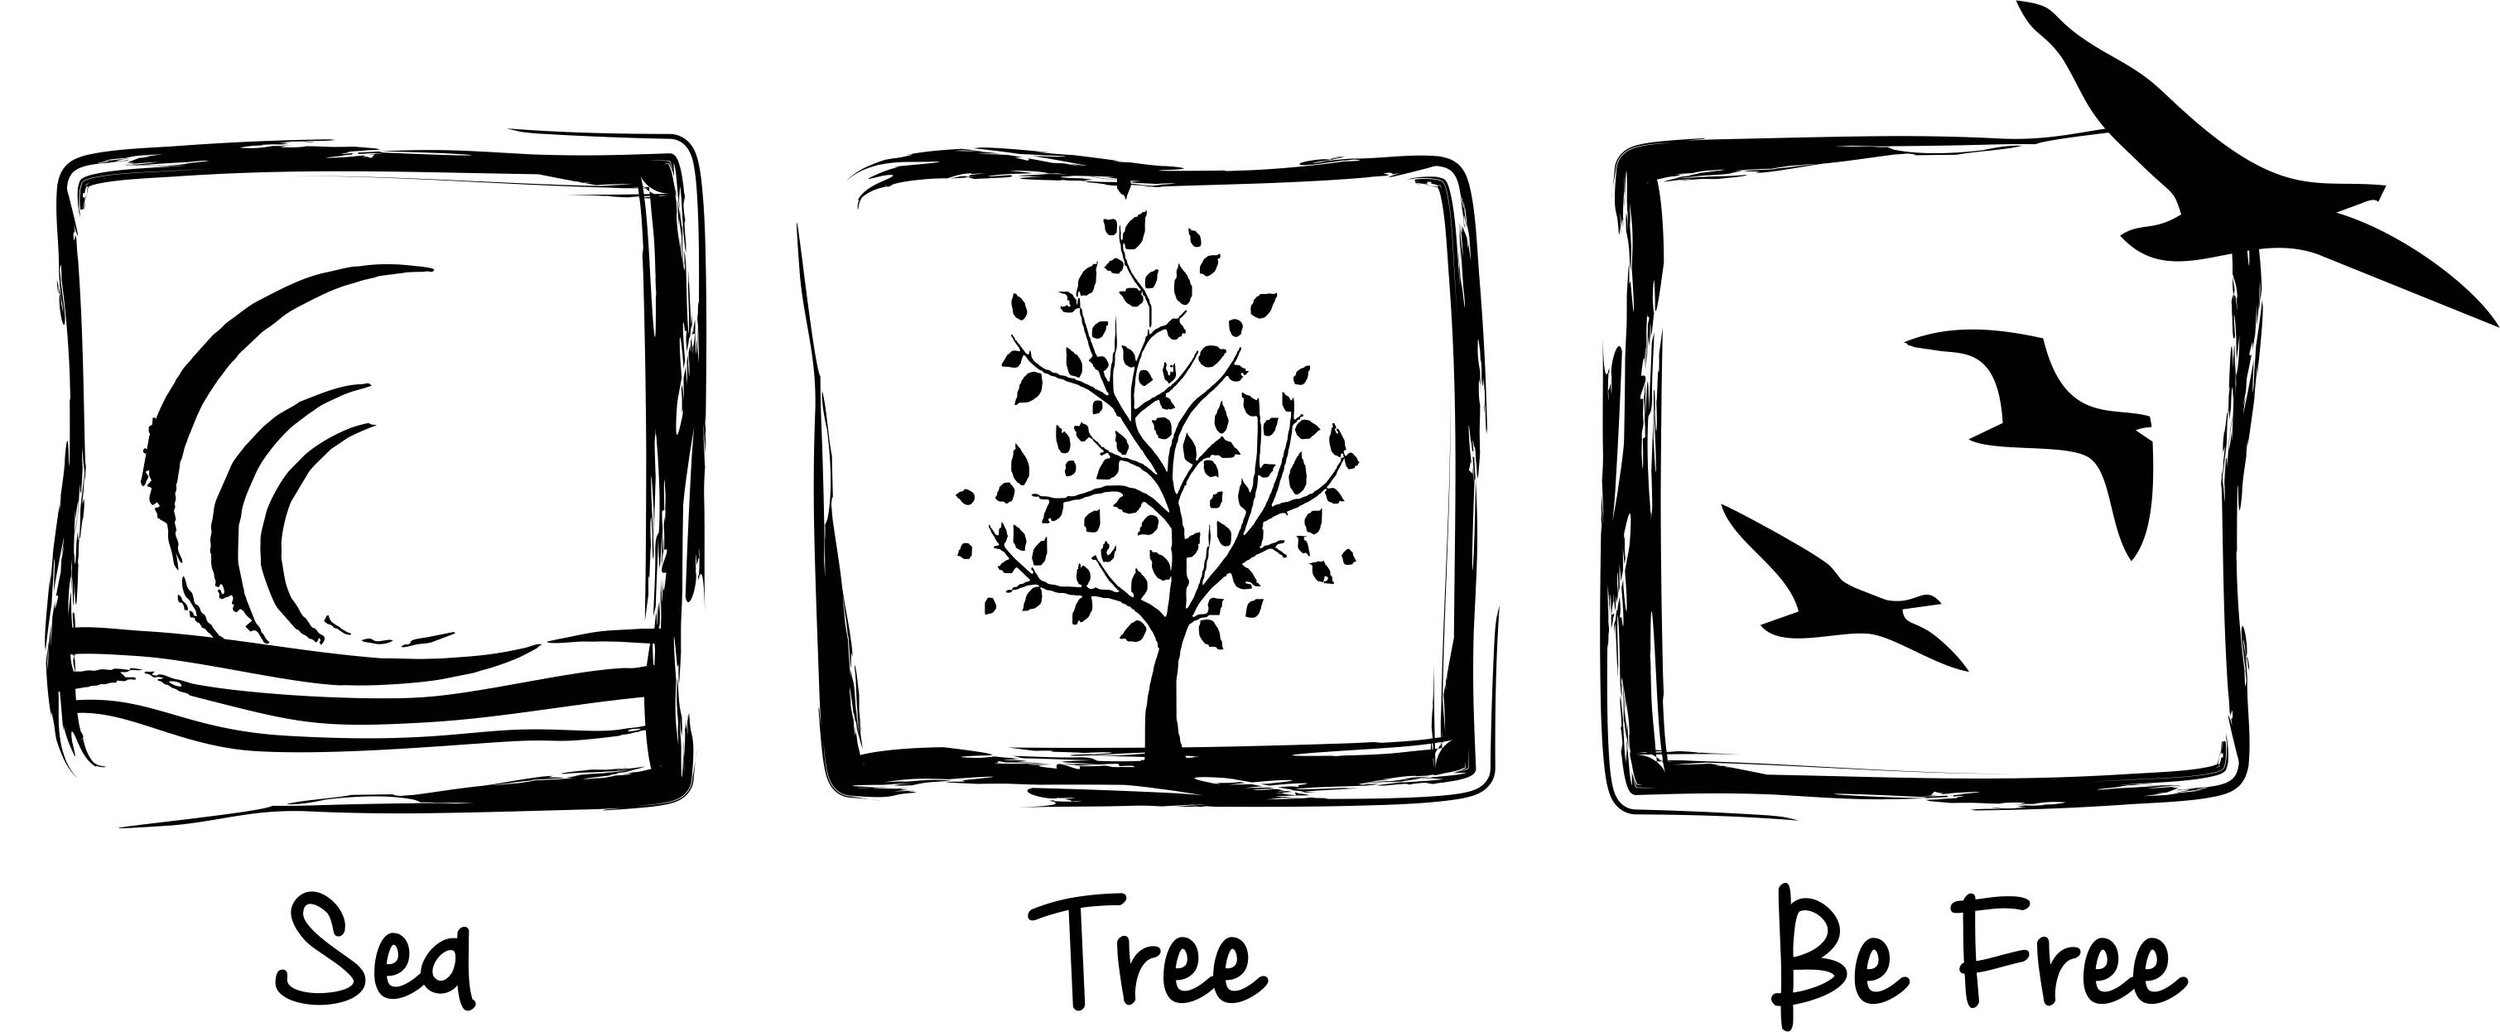 Sea, Tree, Be Free